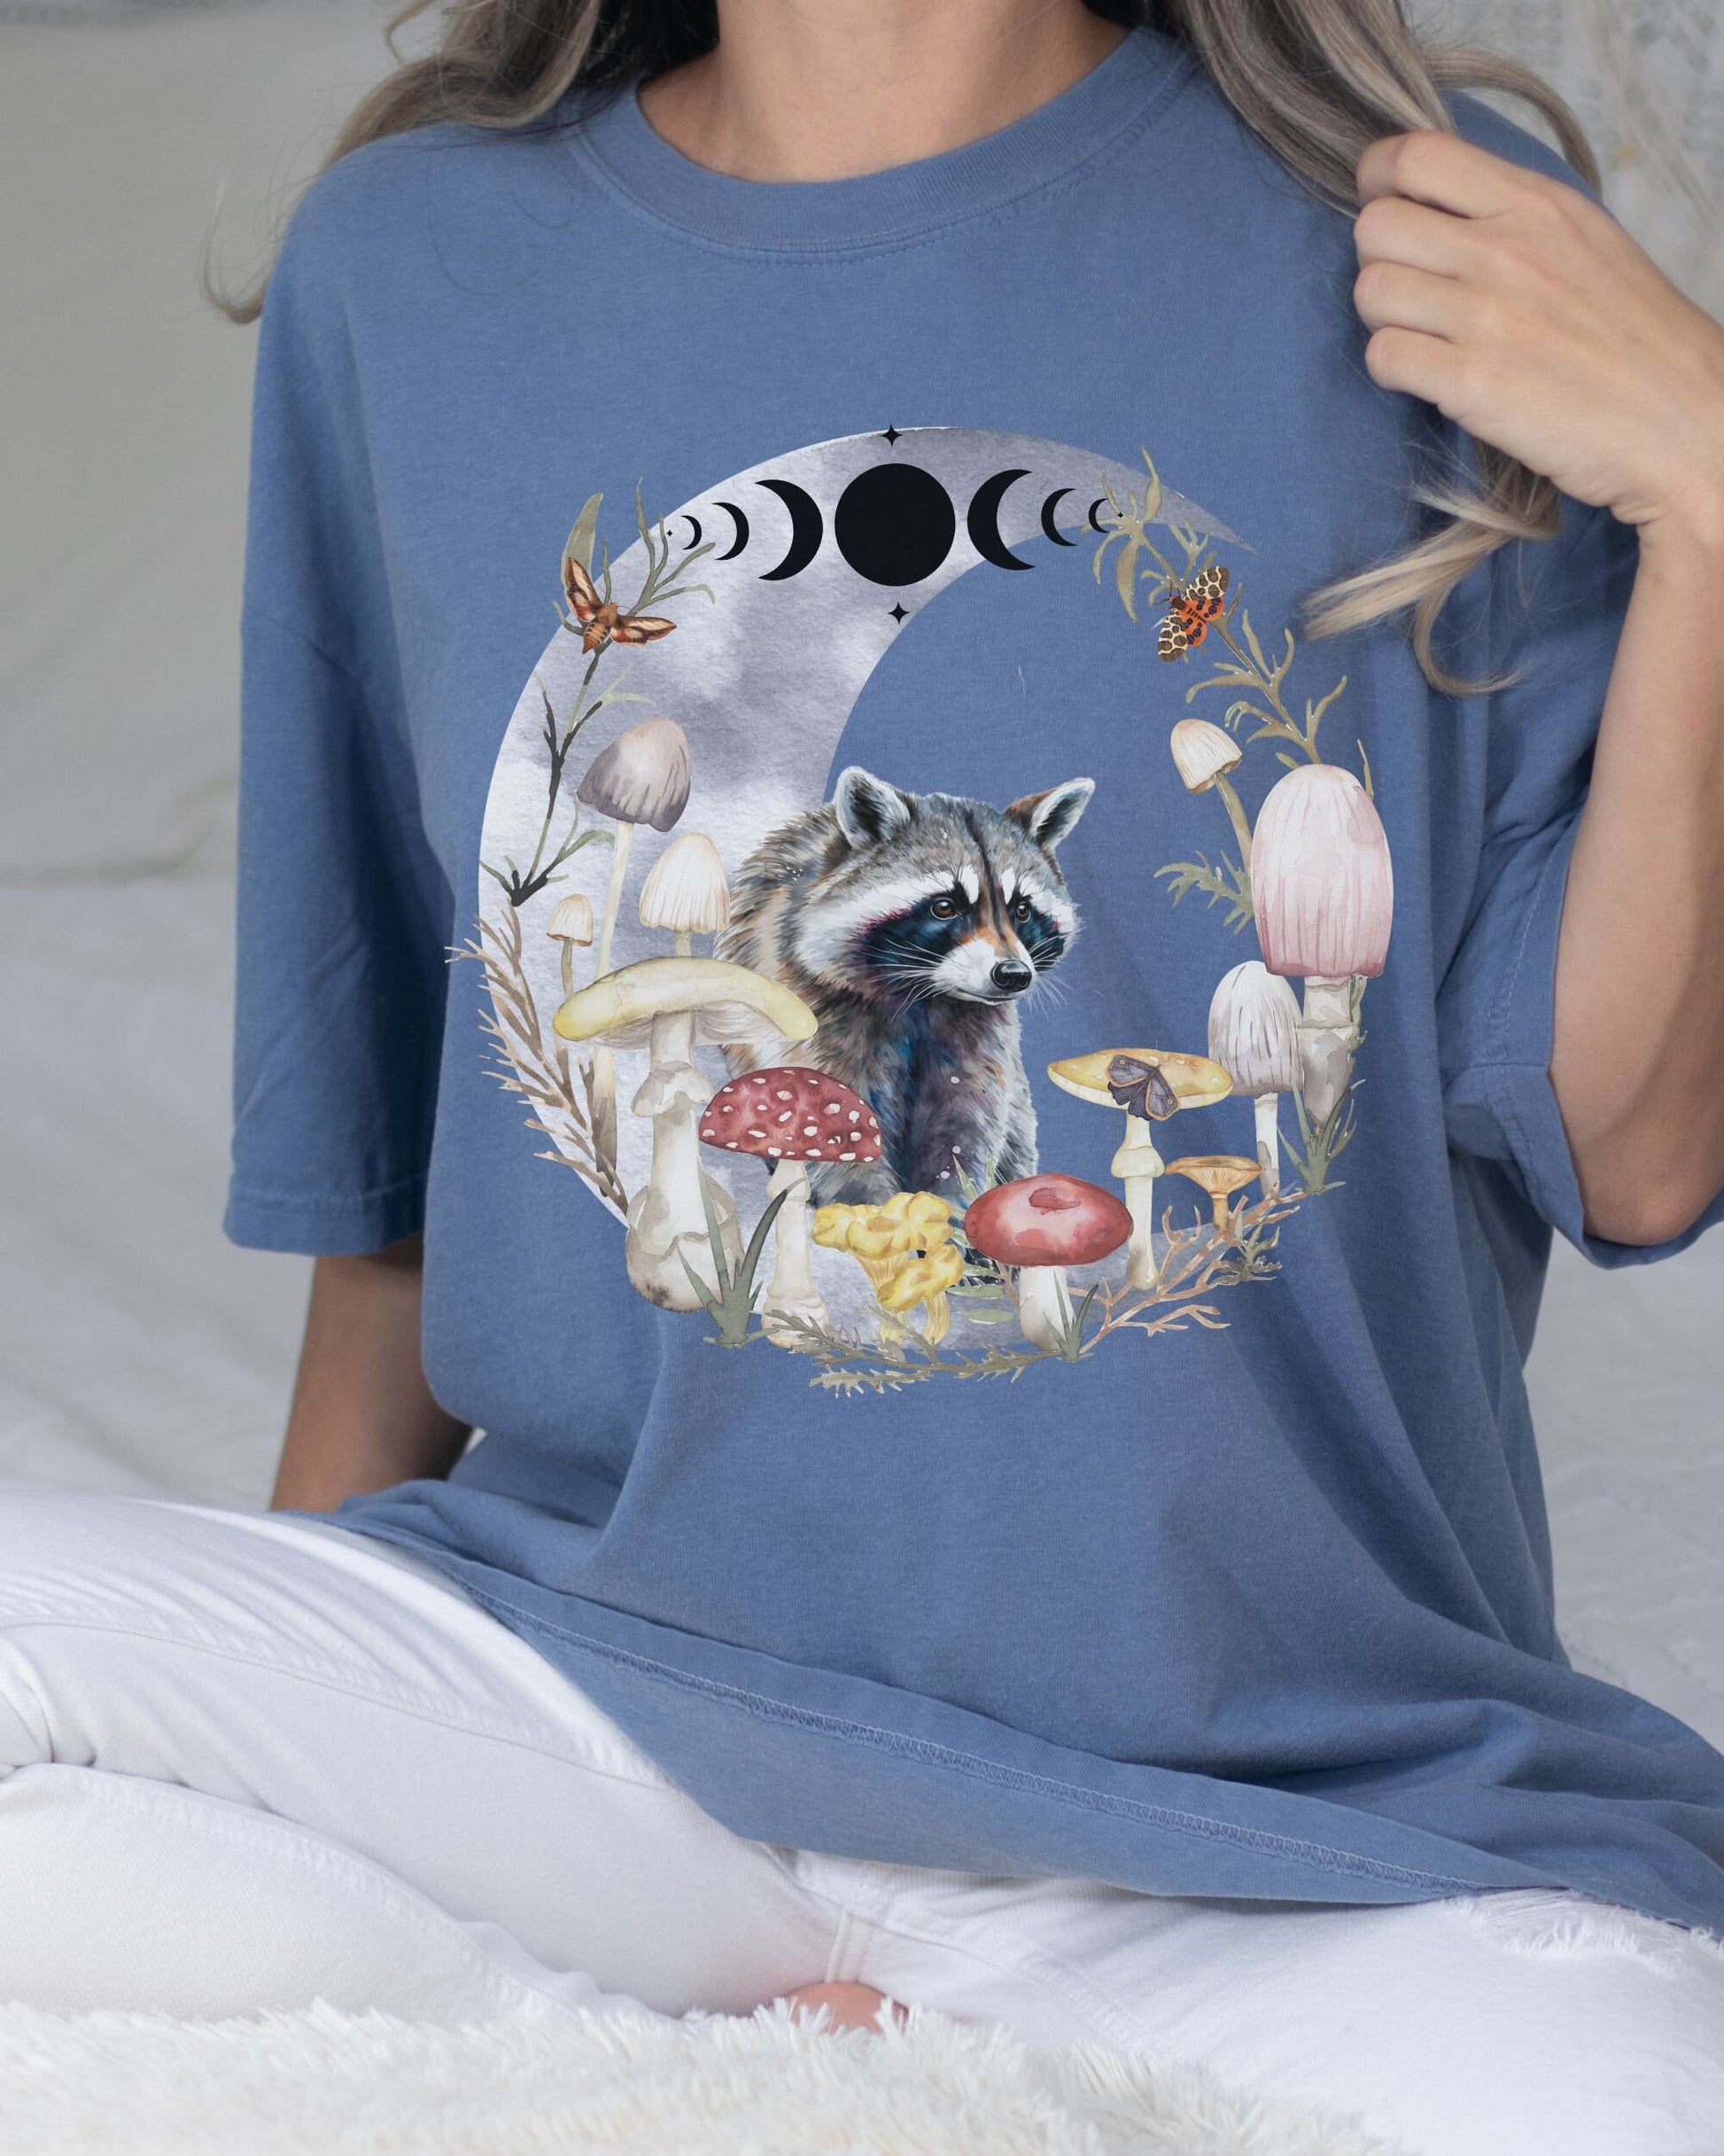 Raccoon Shirt Dark Cottagecore Moth Shirt Mushroom Shirt Moon Phases Goblincore Shirt Forestcore Shirt Cottage Core T Shirt Racoon Shirt